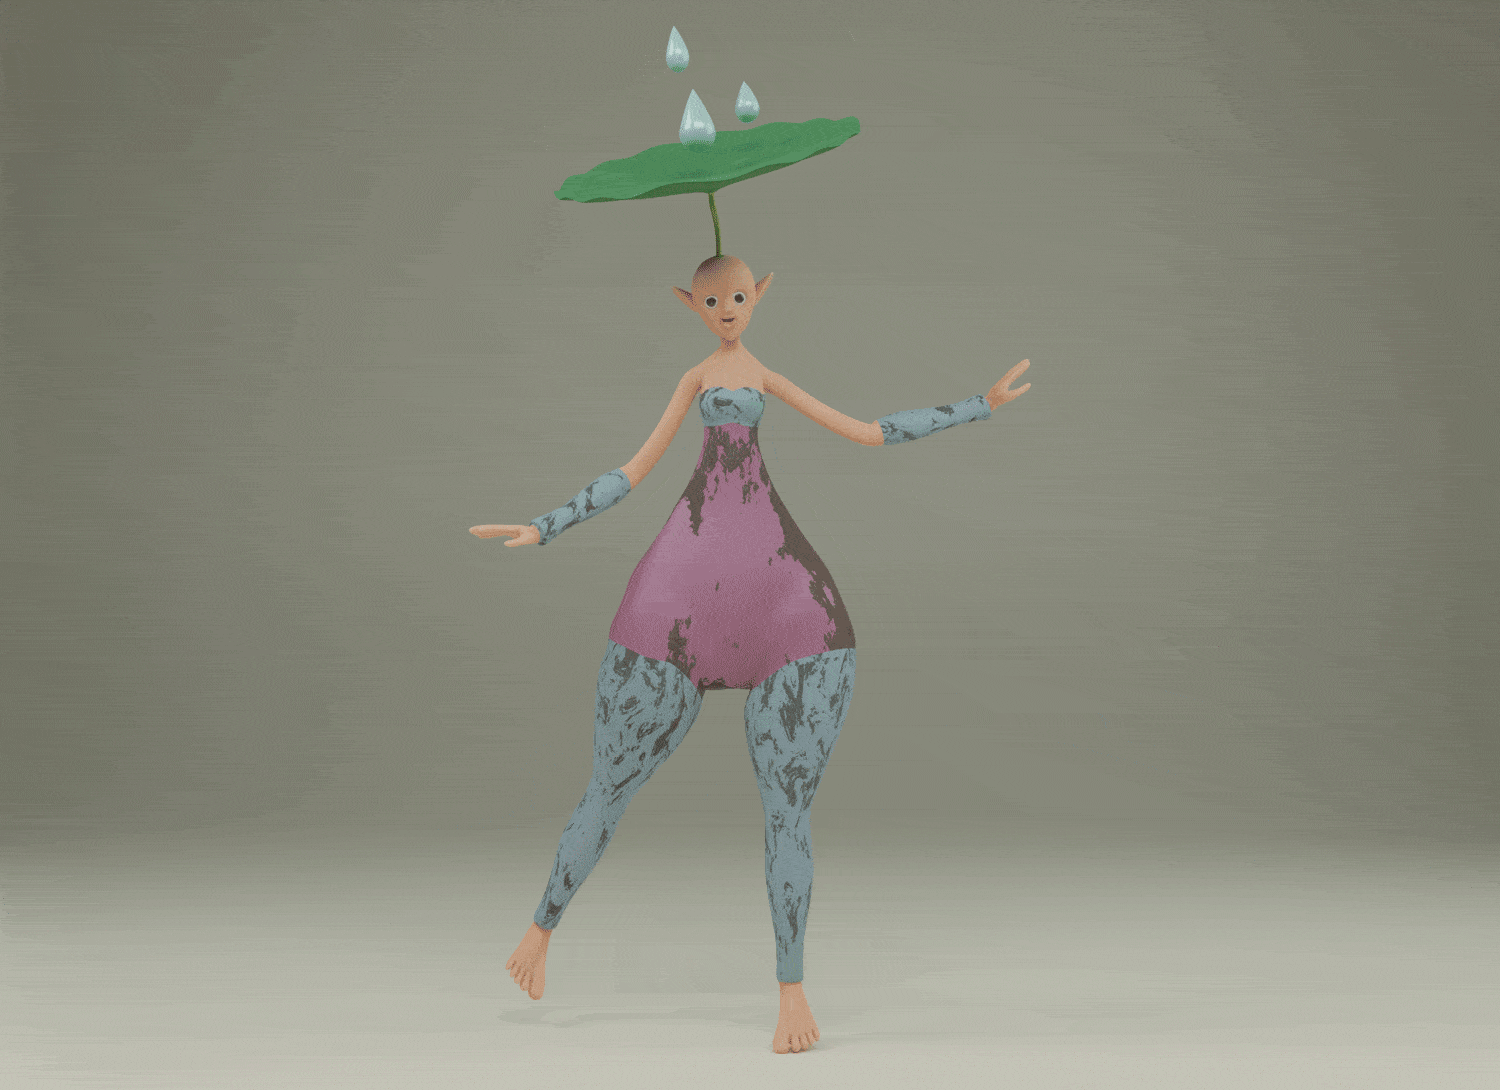 Image of a 3D elvish character